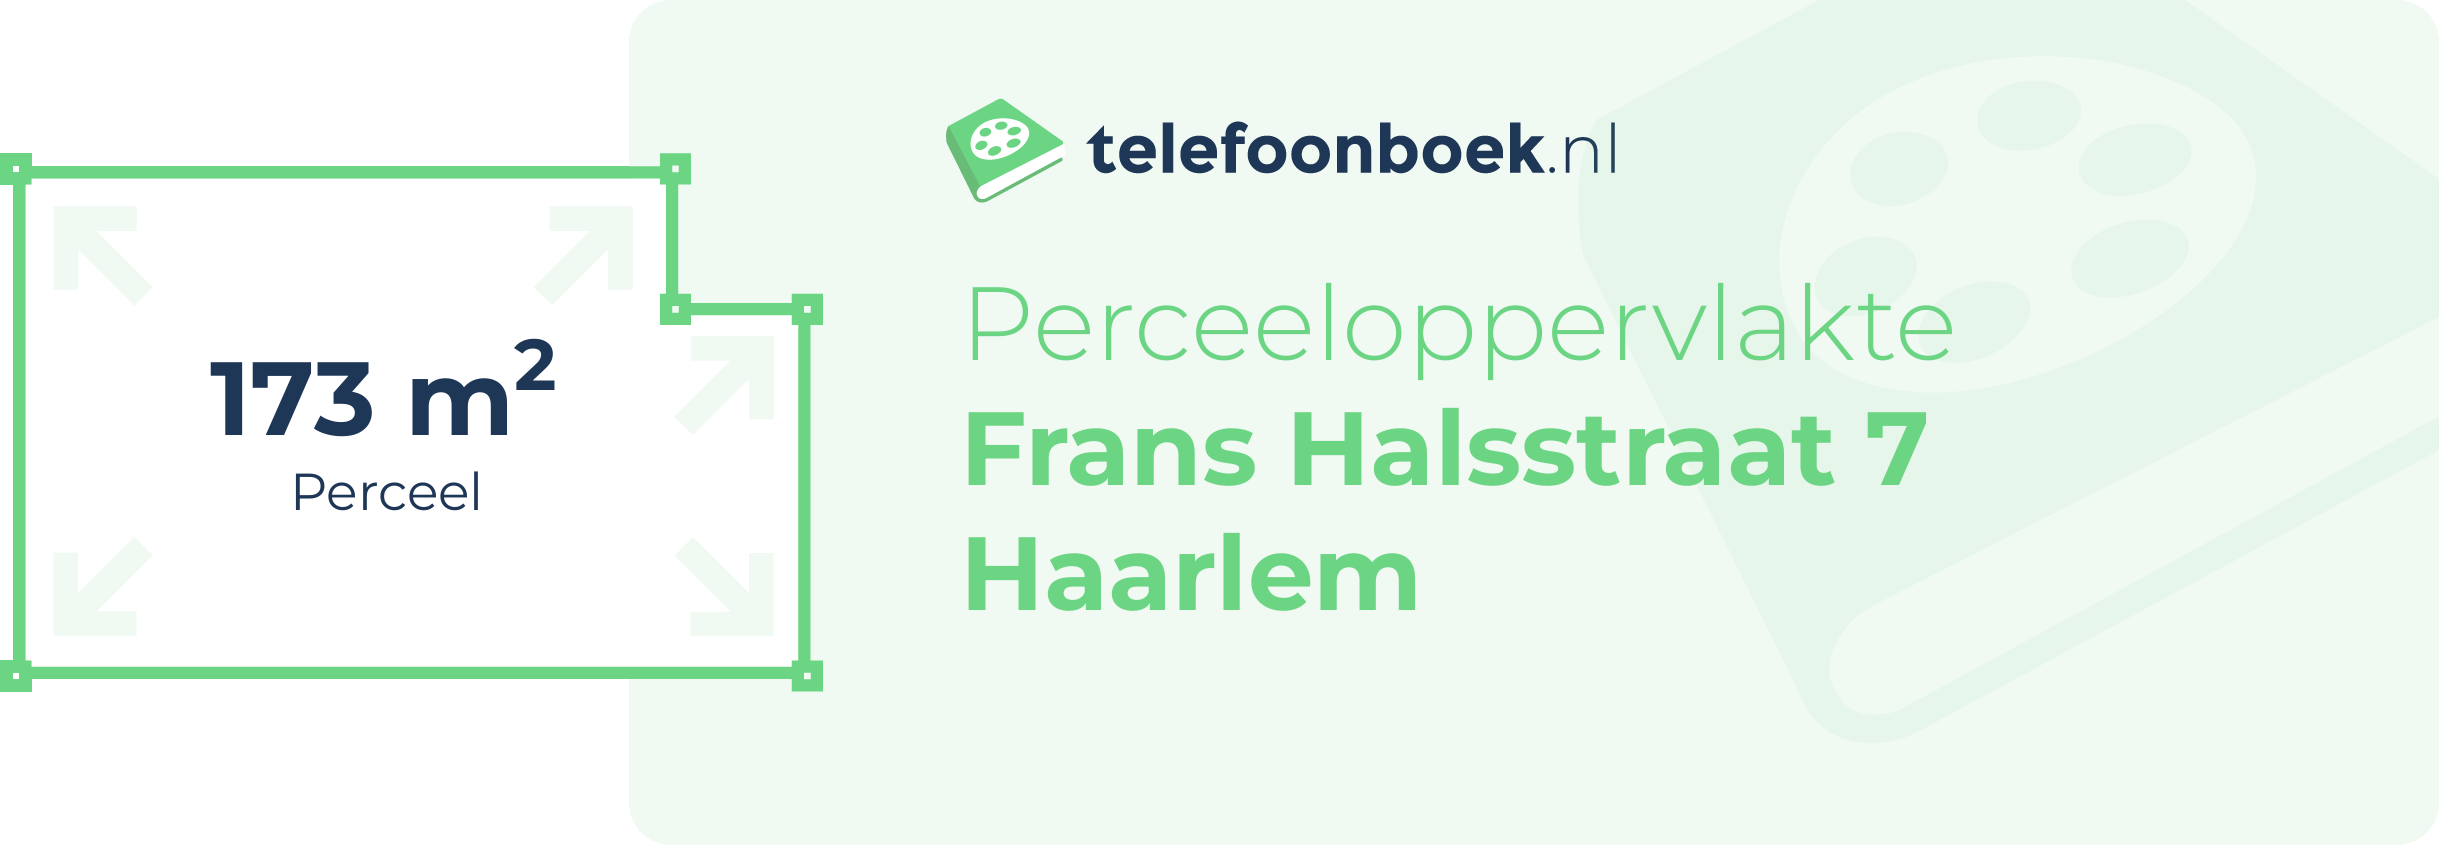 Perceeloppervlakte Frans Halsstraat 7 Haarlem